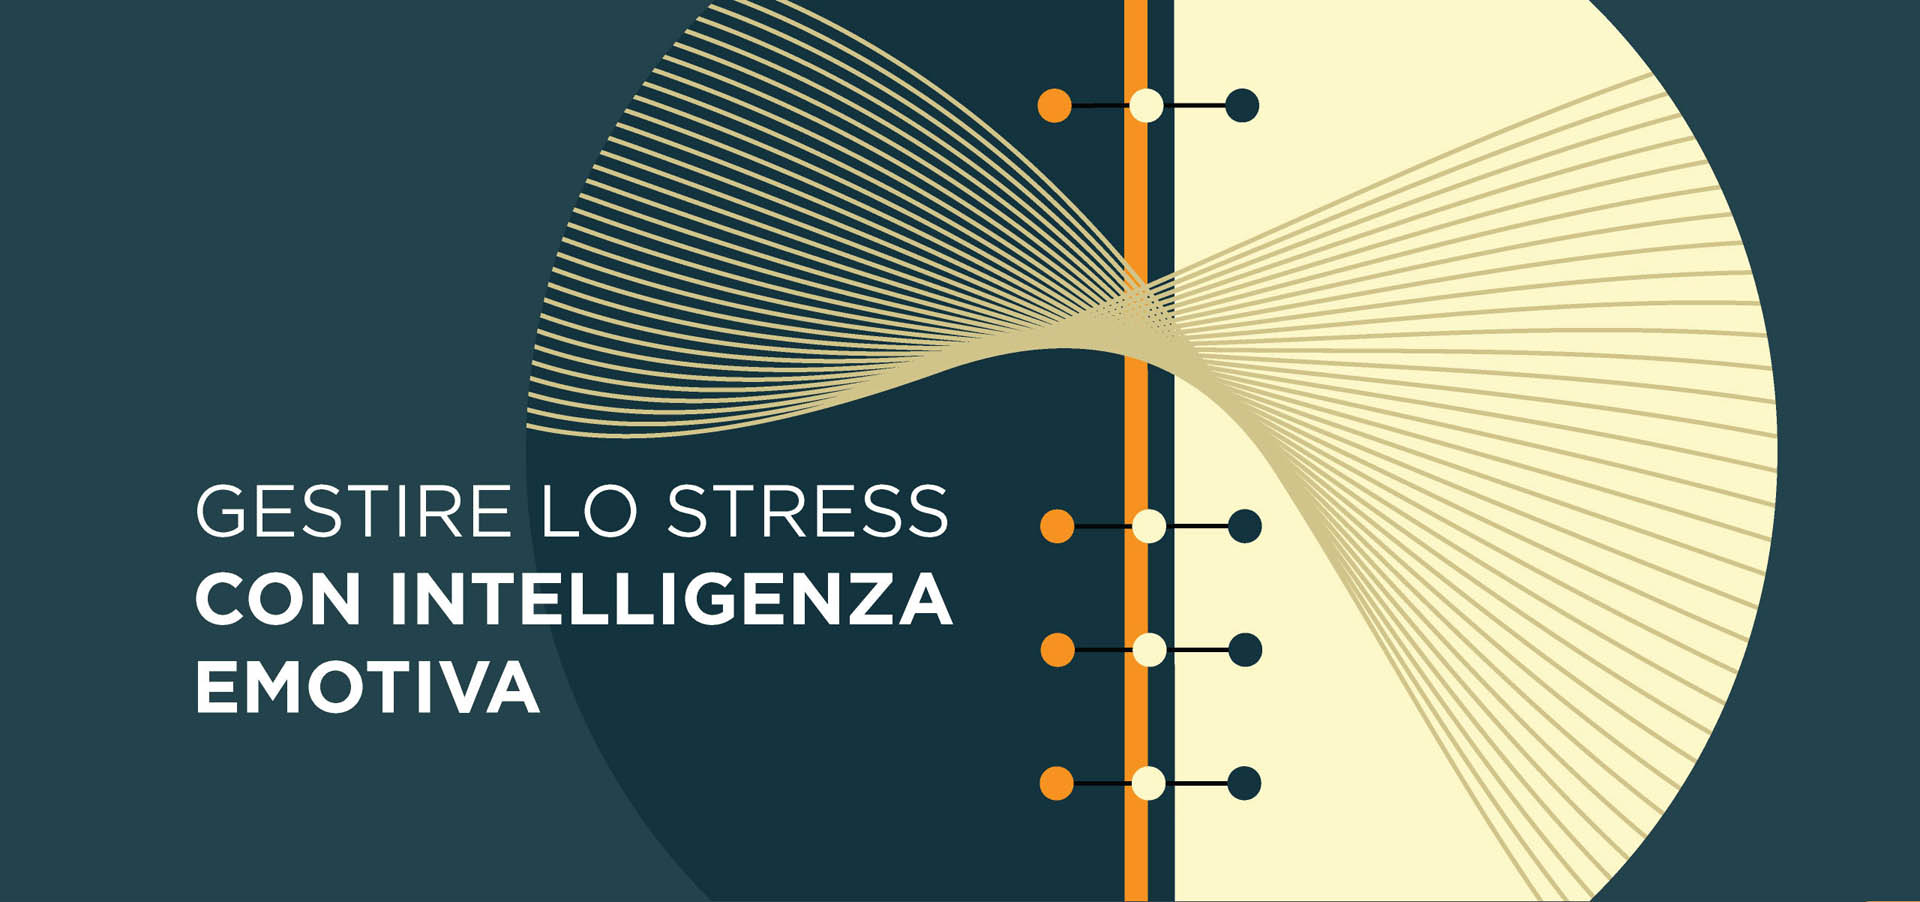 Gestire lo stress con intelligenza emotiva